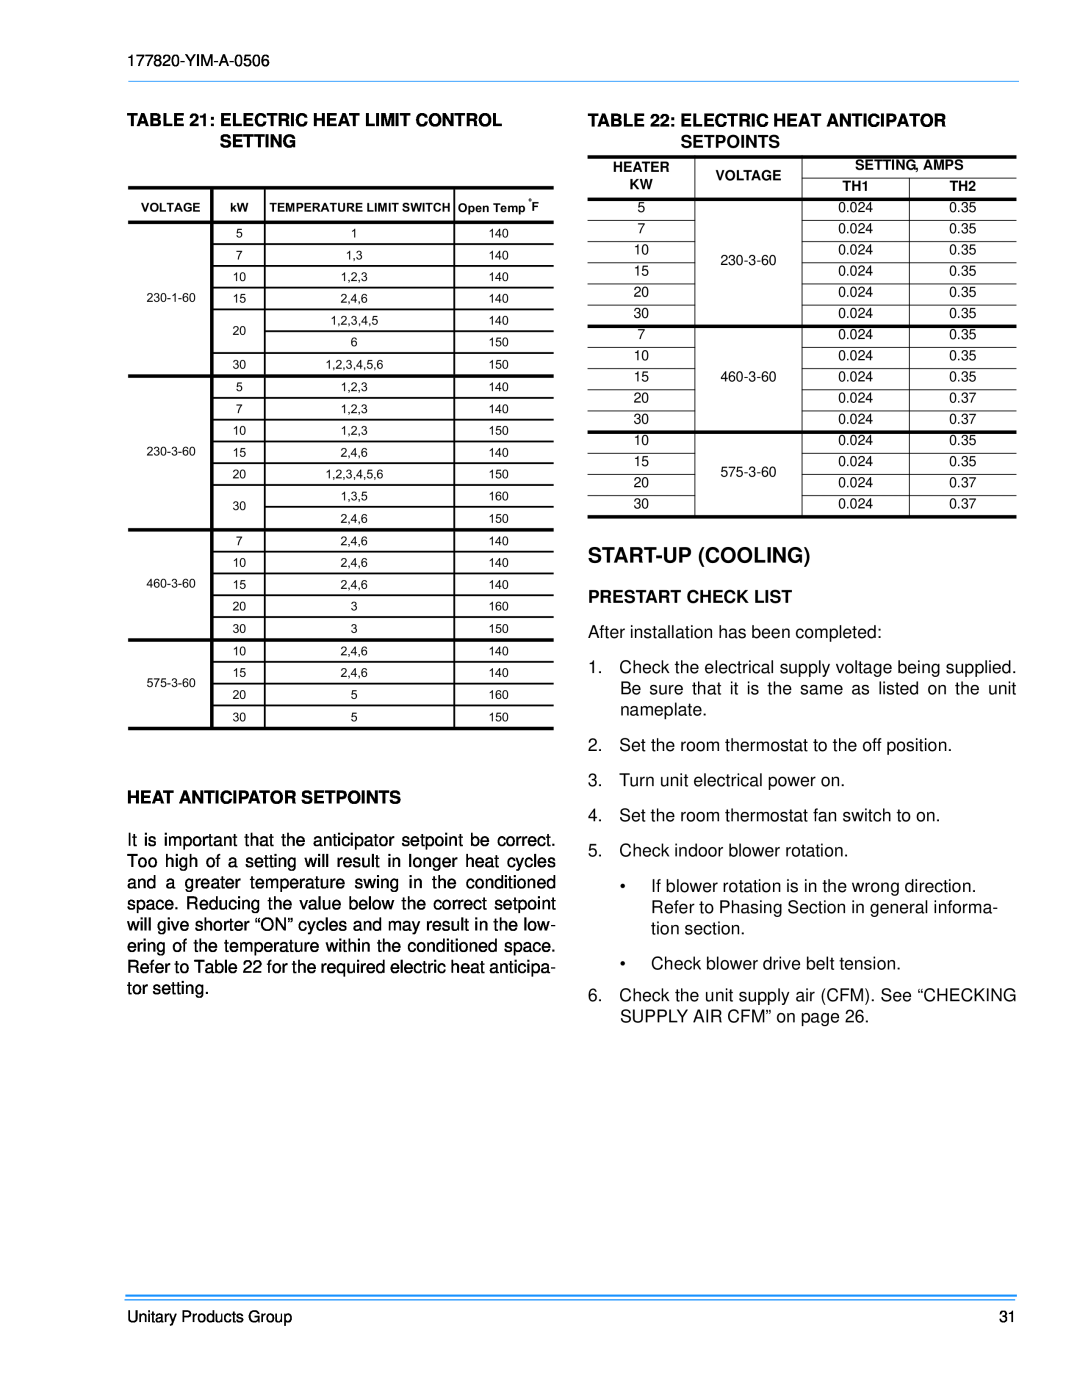 York 048 & 060 Start-Upcooling, Electric Heat Limit Control Setting, Heat Anticipator Setpoints, Prestart Check List 